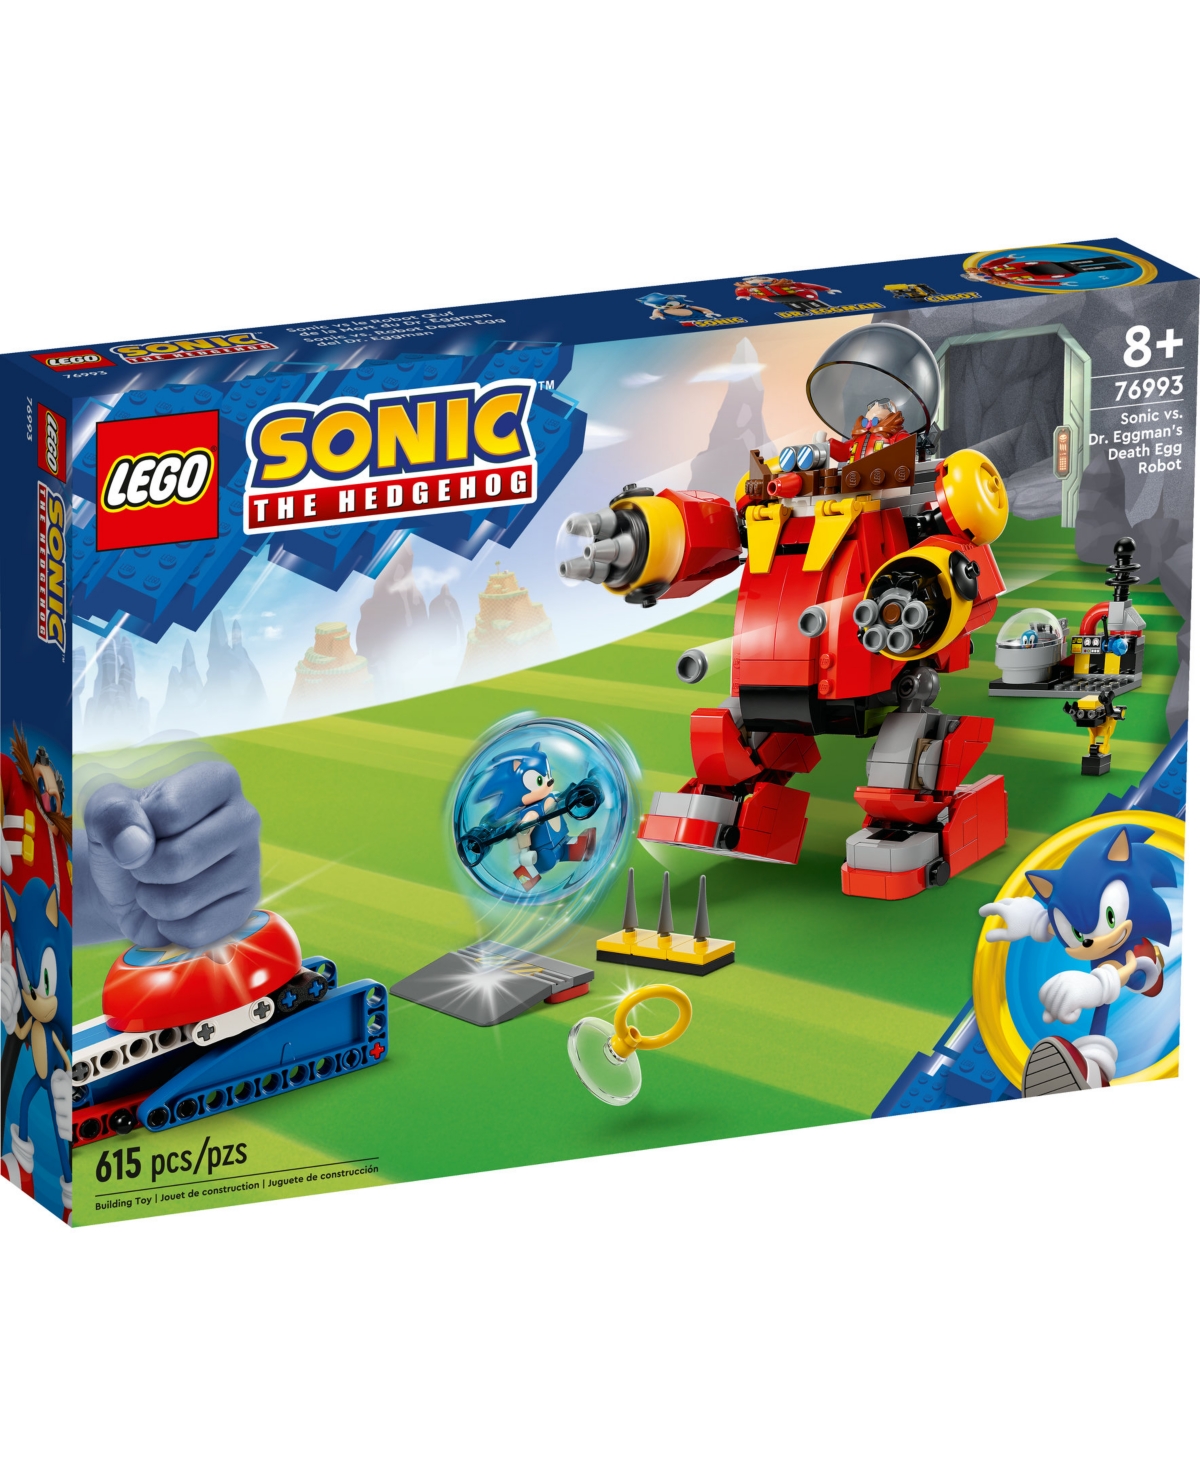 Shop Lego Sonic The Hedgehog 76993 Sonic Vs Dr. Eggman's Death Egg Robot Toy Building Set In Multicolor